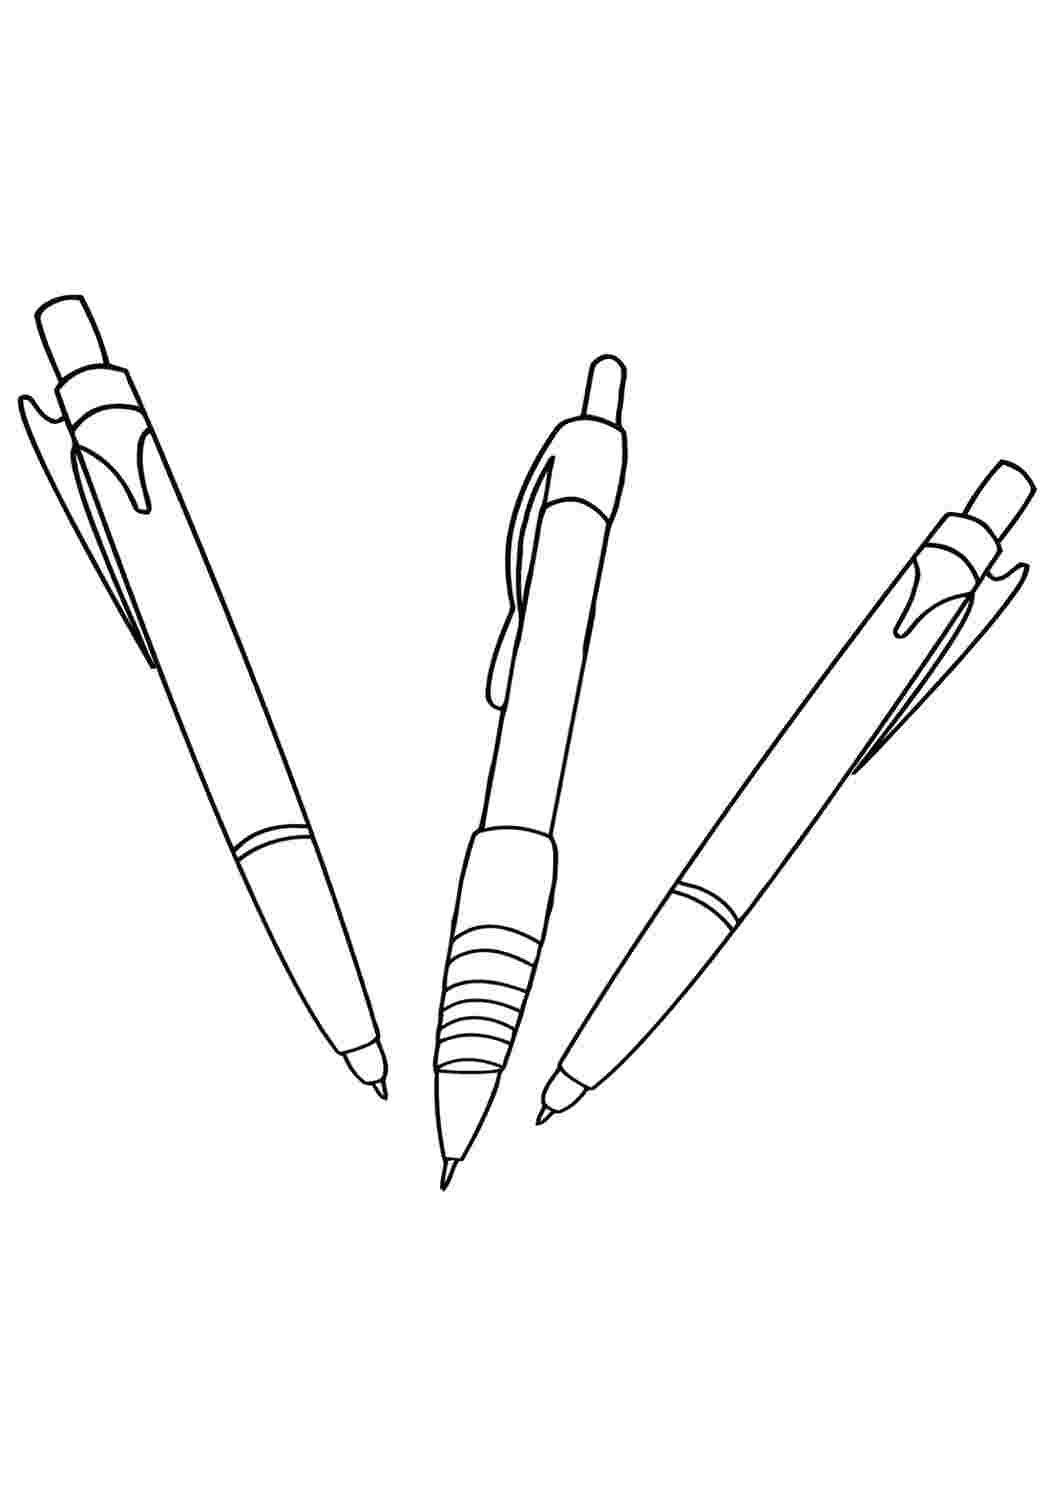 Pen ten. Ручка раскраска. Раскраска ручка шариковая. Раскраска ручка и карандаш. Ручка раскраска для детей.